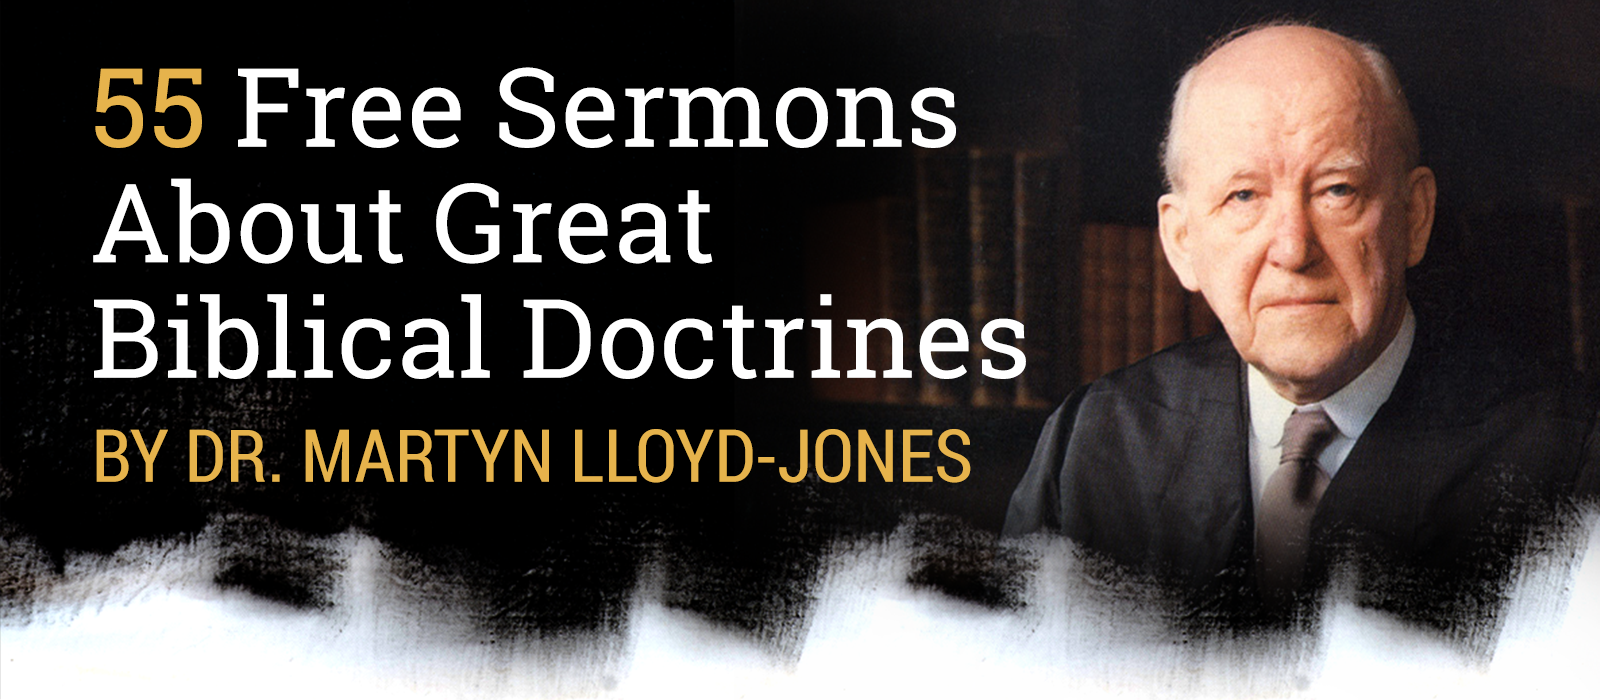 55 Free Sermons About Great Biblical Doctrines by Dr. Martyn Lloyd-Jones